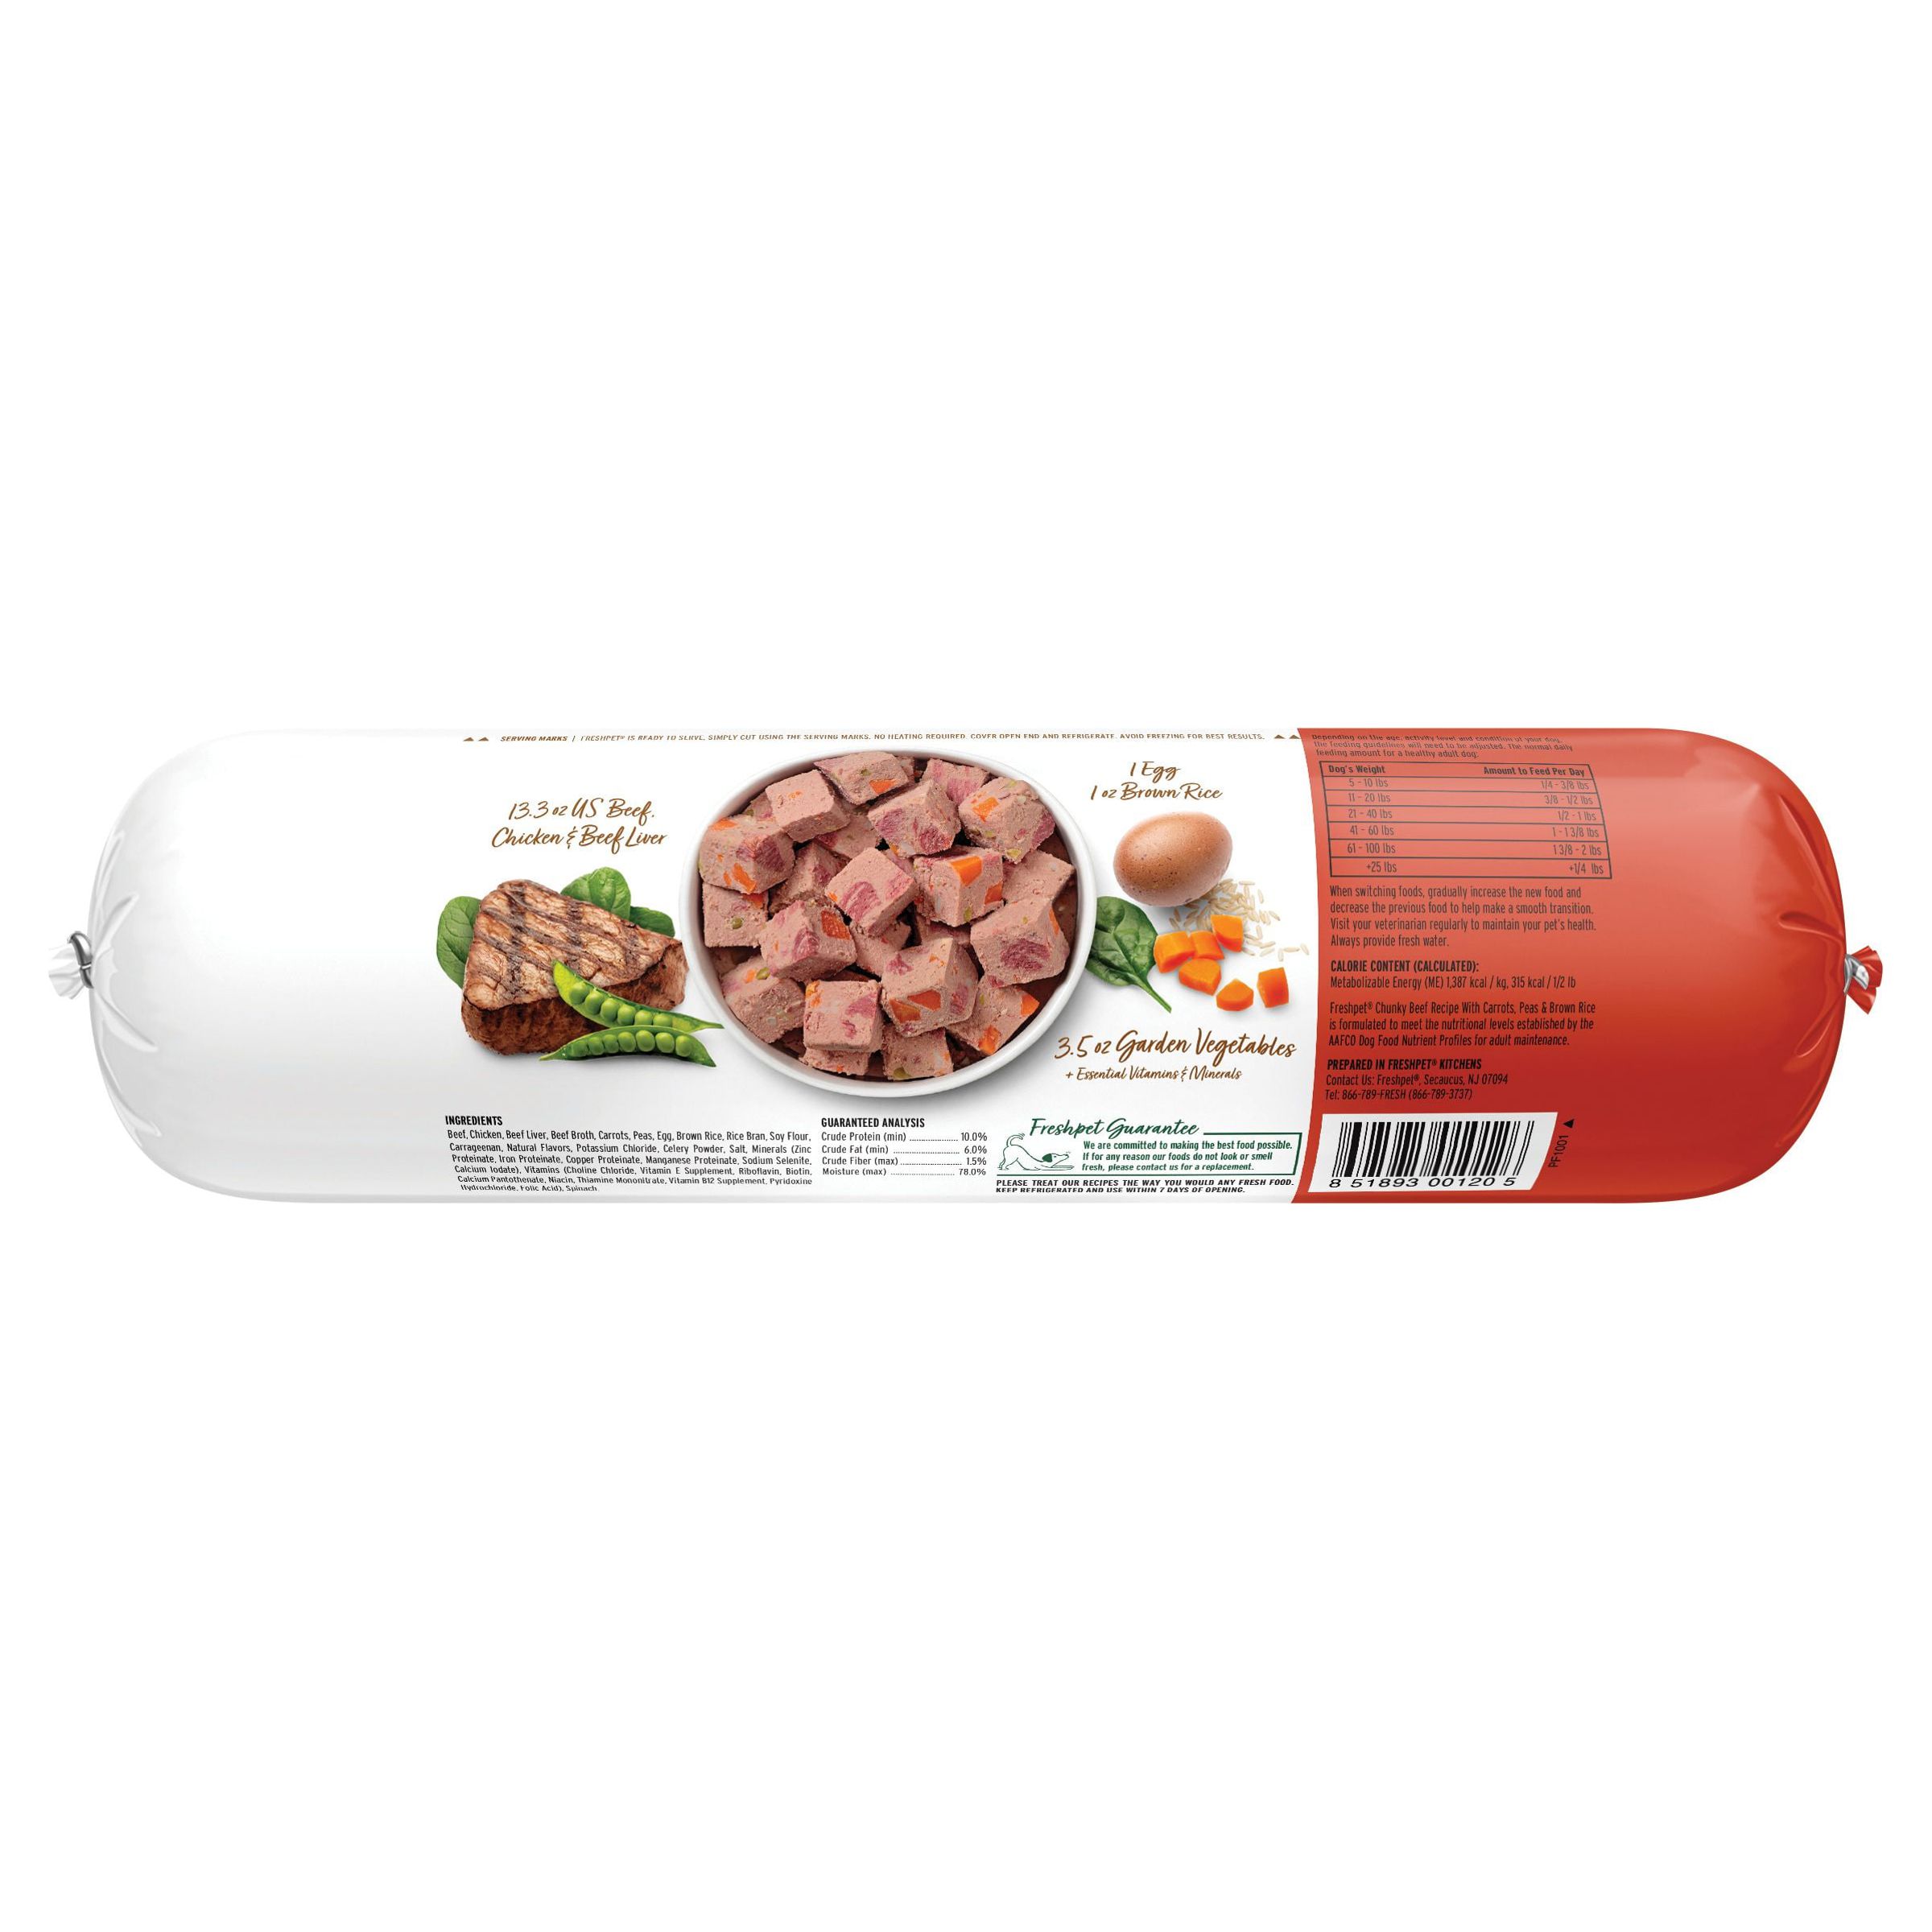 Freshpet Healthy & Natural Dog Food, Fresh Beef Roll, 1.5lb - image 2 of 8